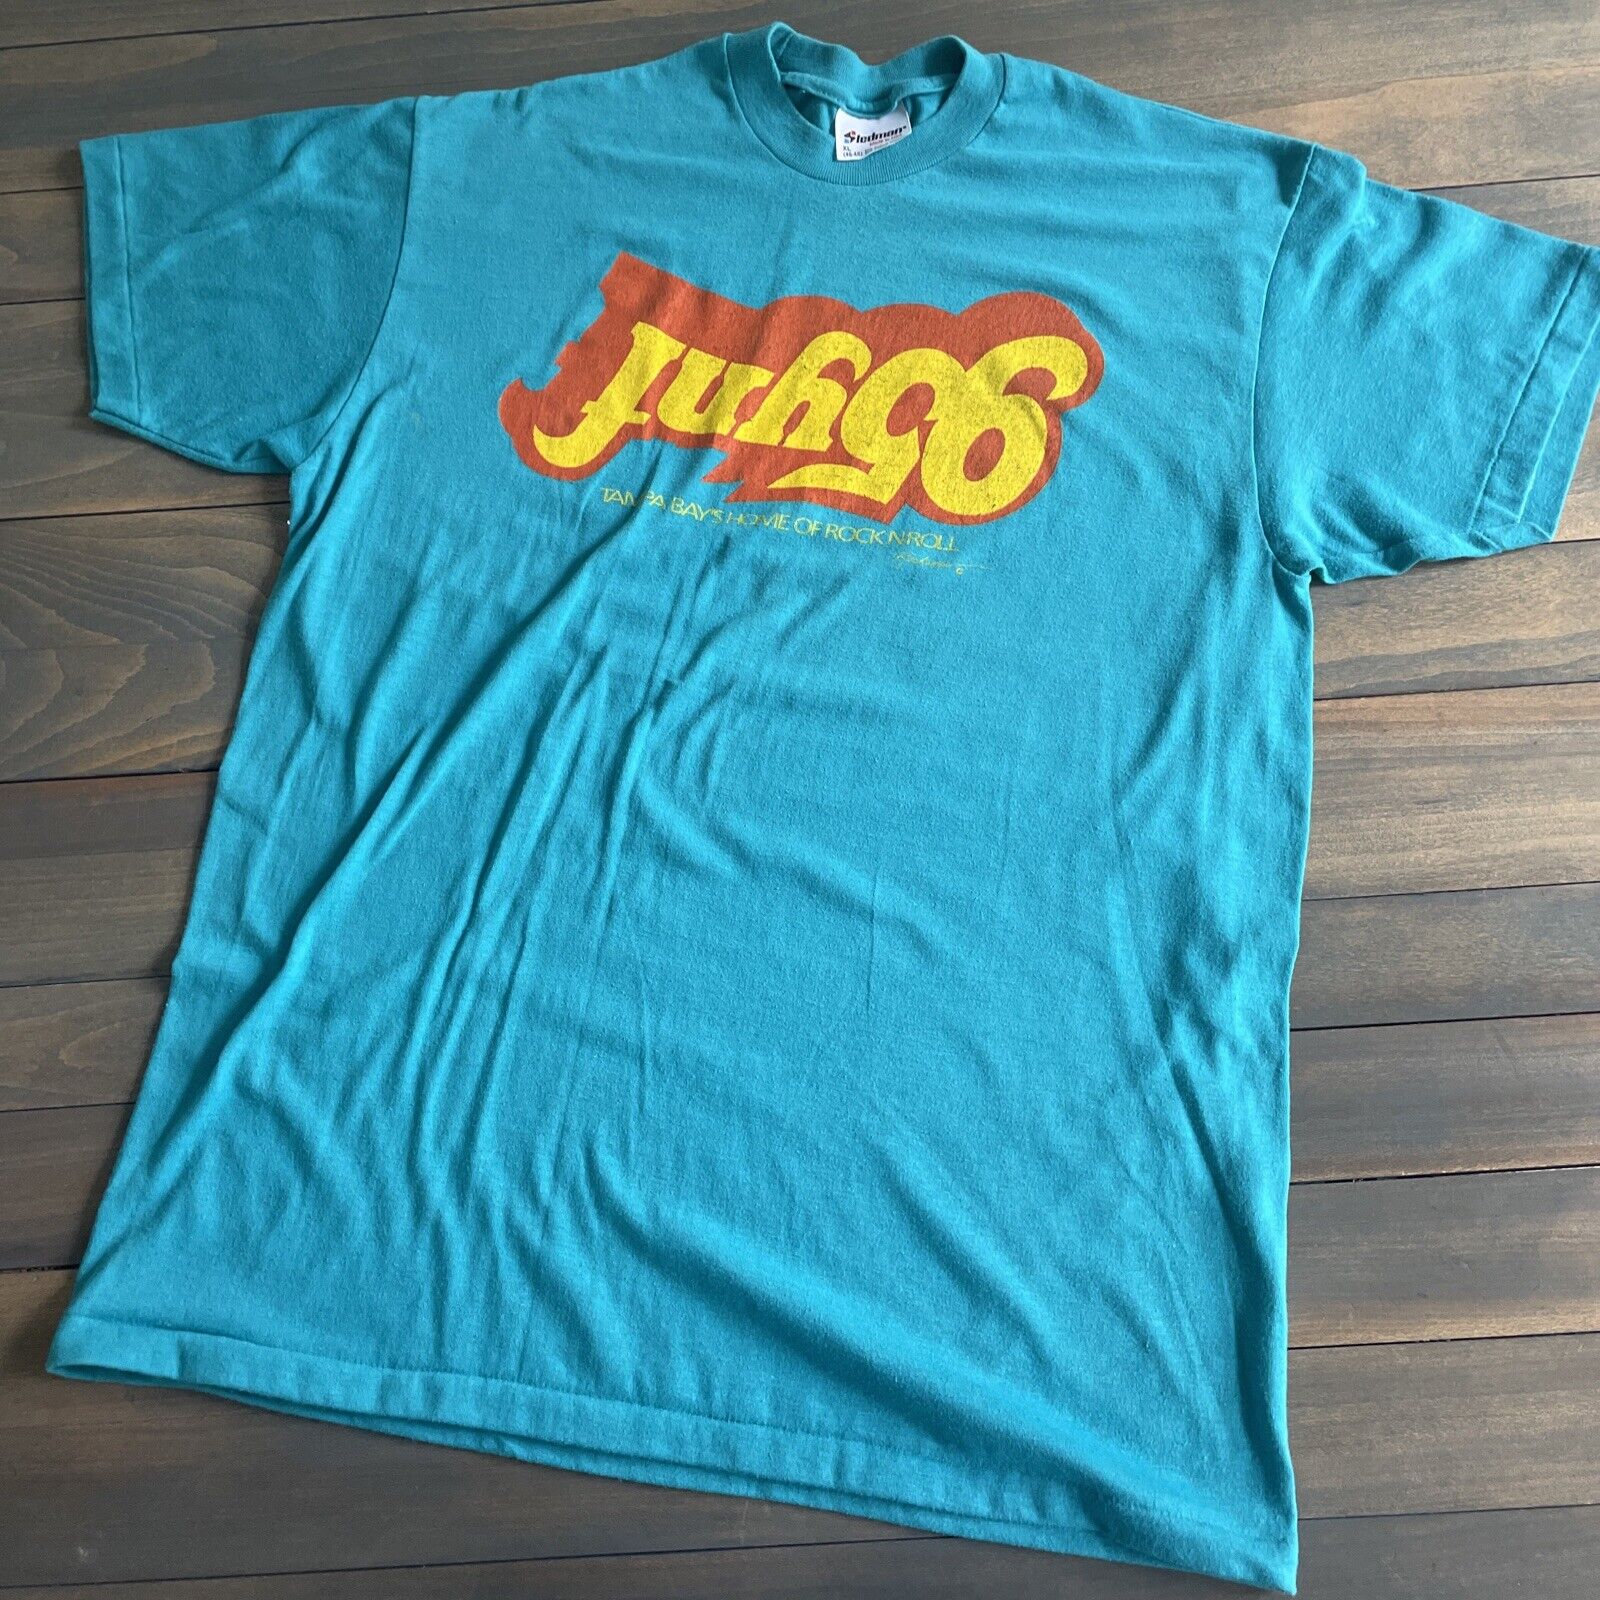 Vintage Blue 95ynf Tampa Bay Rock Radio Promo Upside Down Logo - T-Shirt - Large